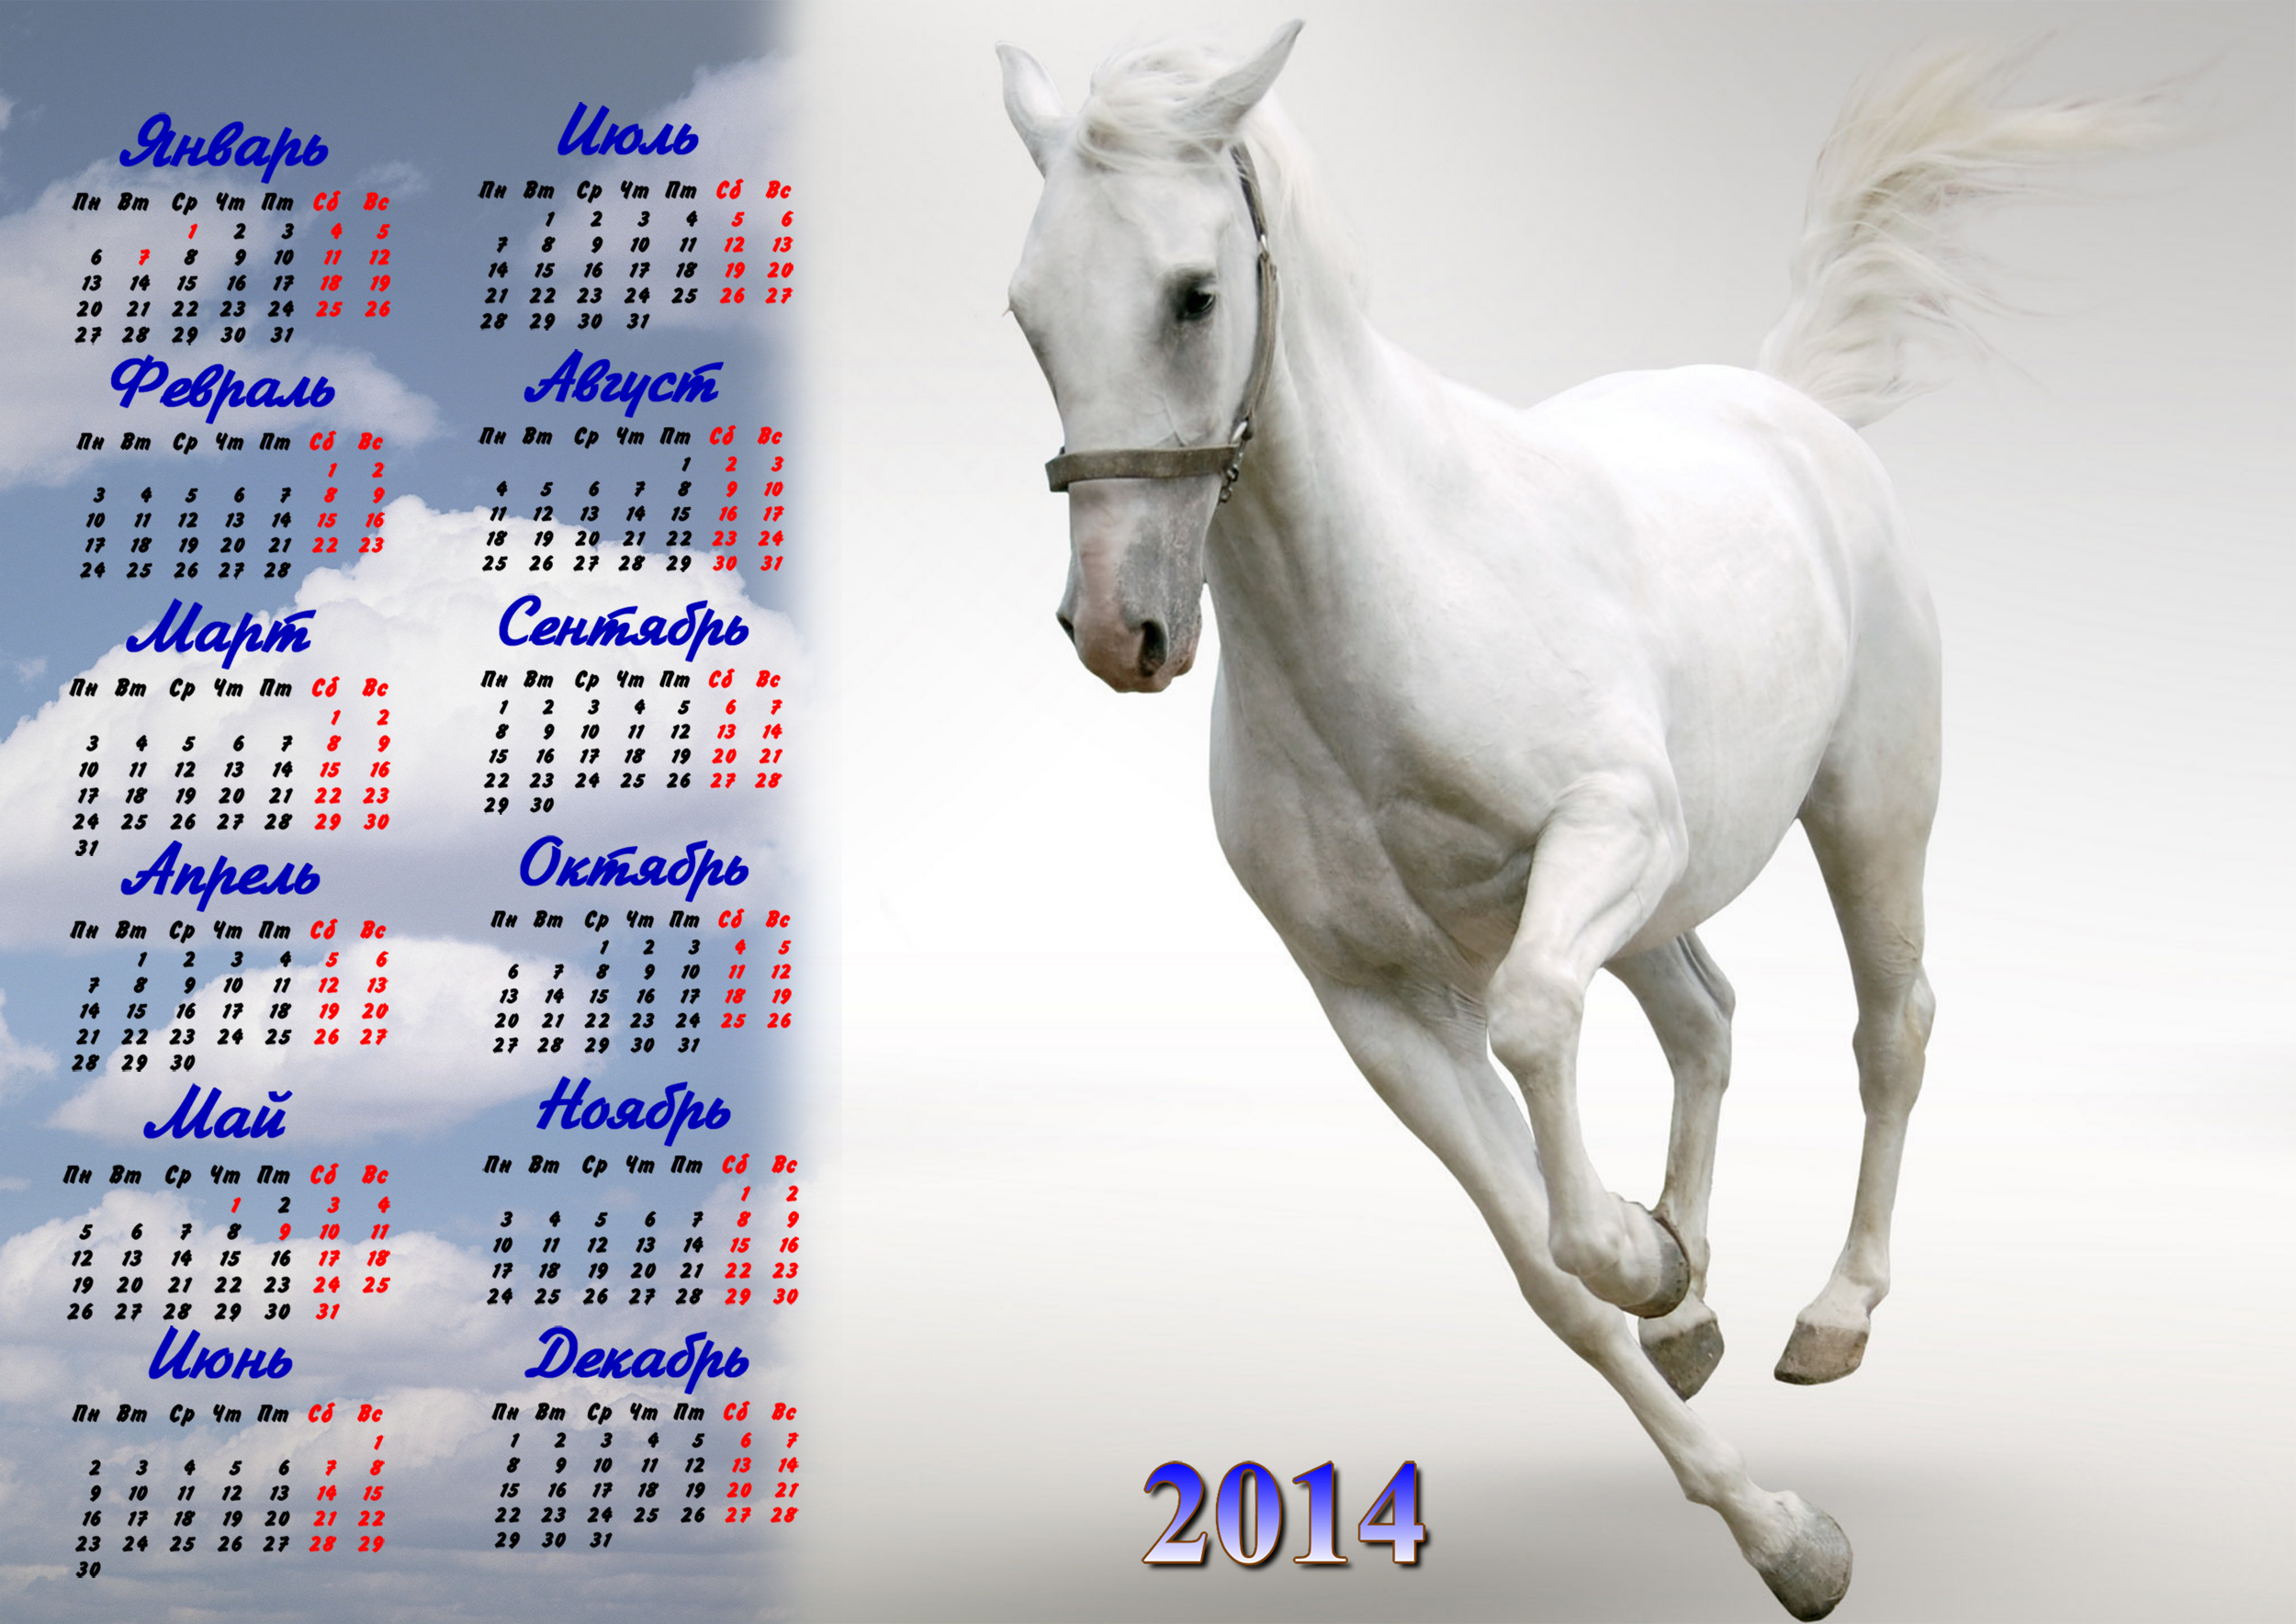 2014 год какого цвета. Год лошади 2014. Календарь 2014 год лошади. Календарь 2014 года. Год лошади календарь.